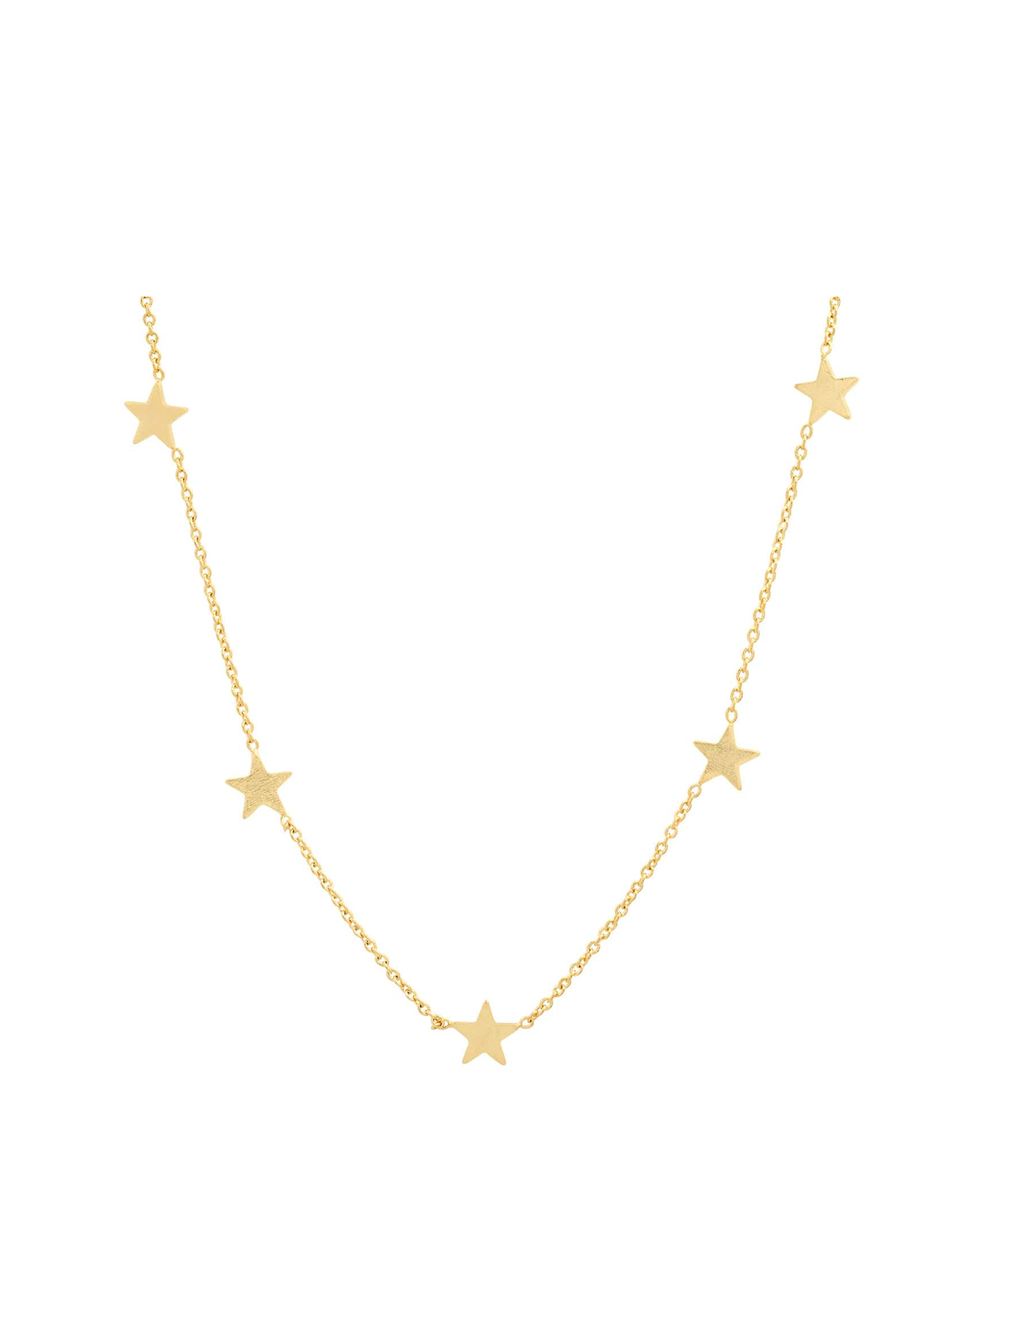 Simple Chain Necklace w/ 5 Mini Stars, Gold